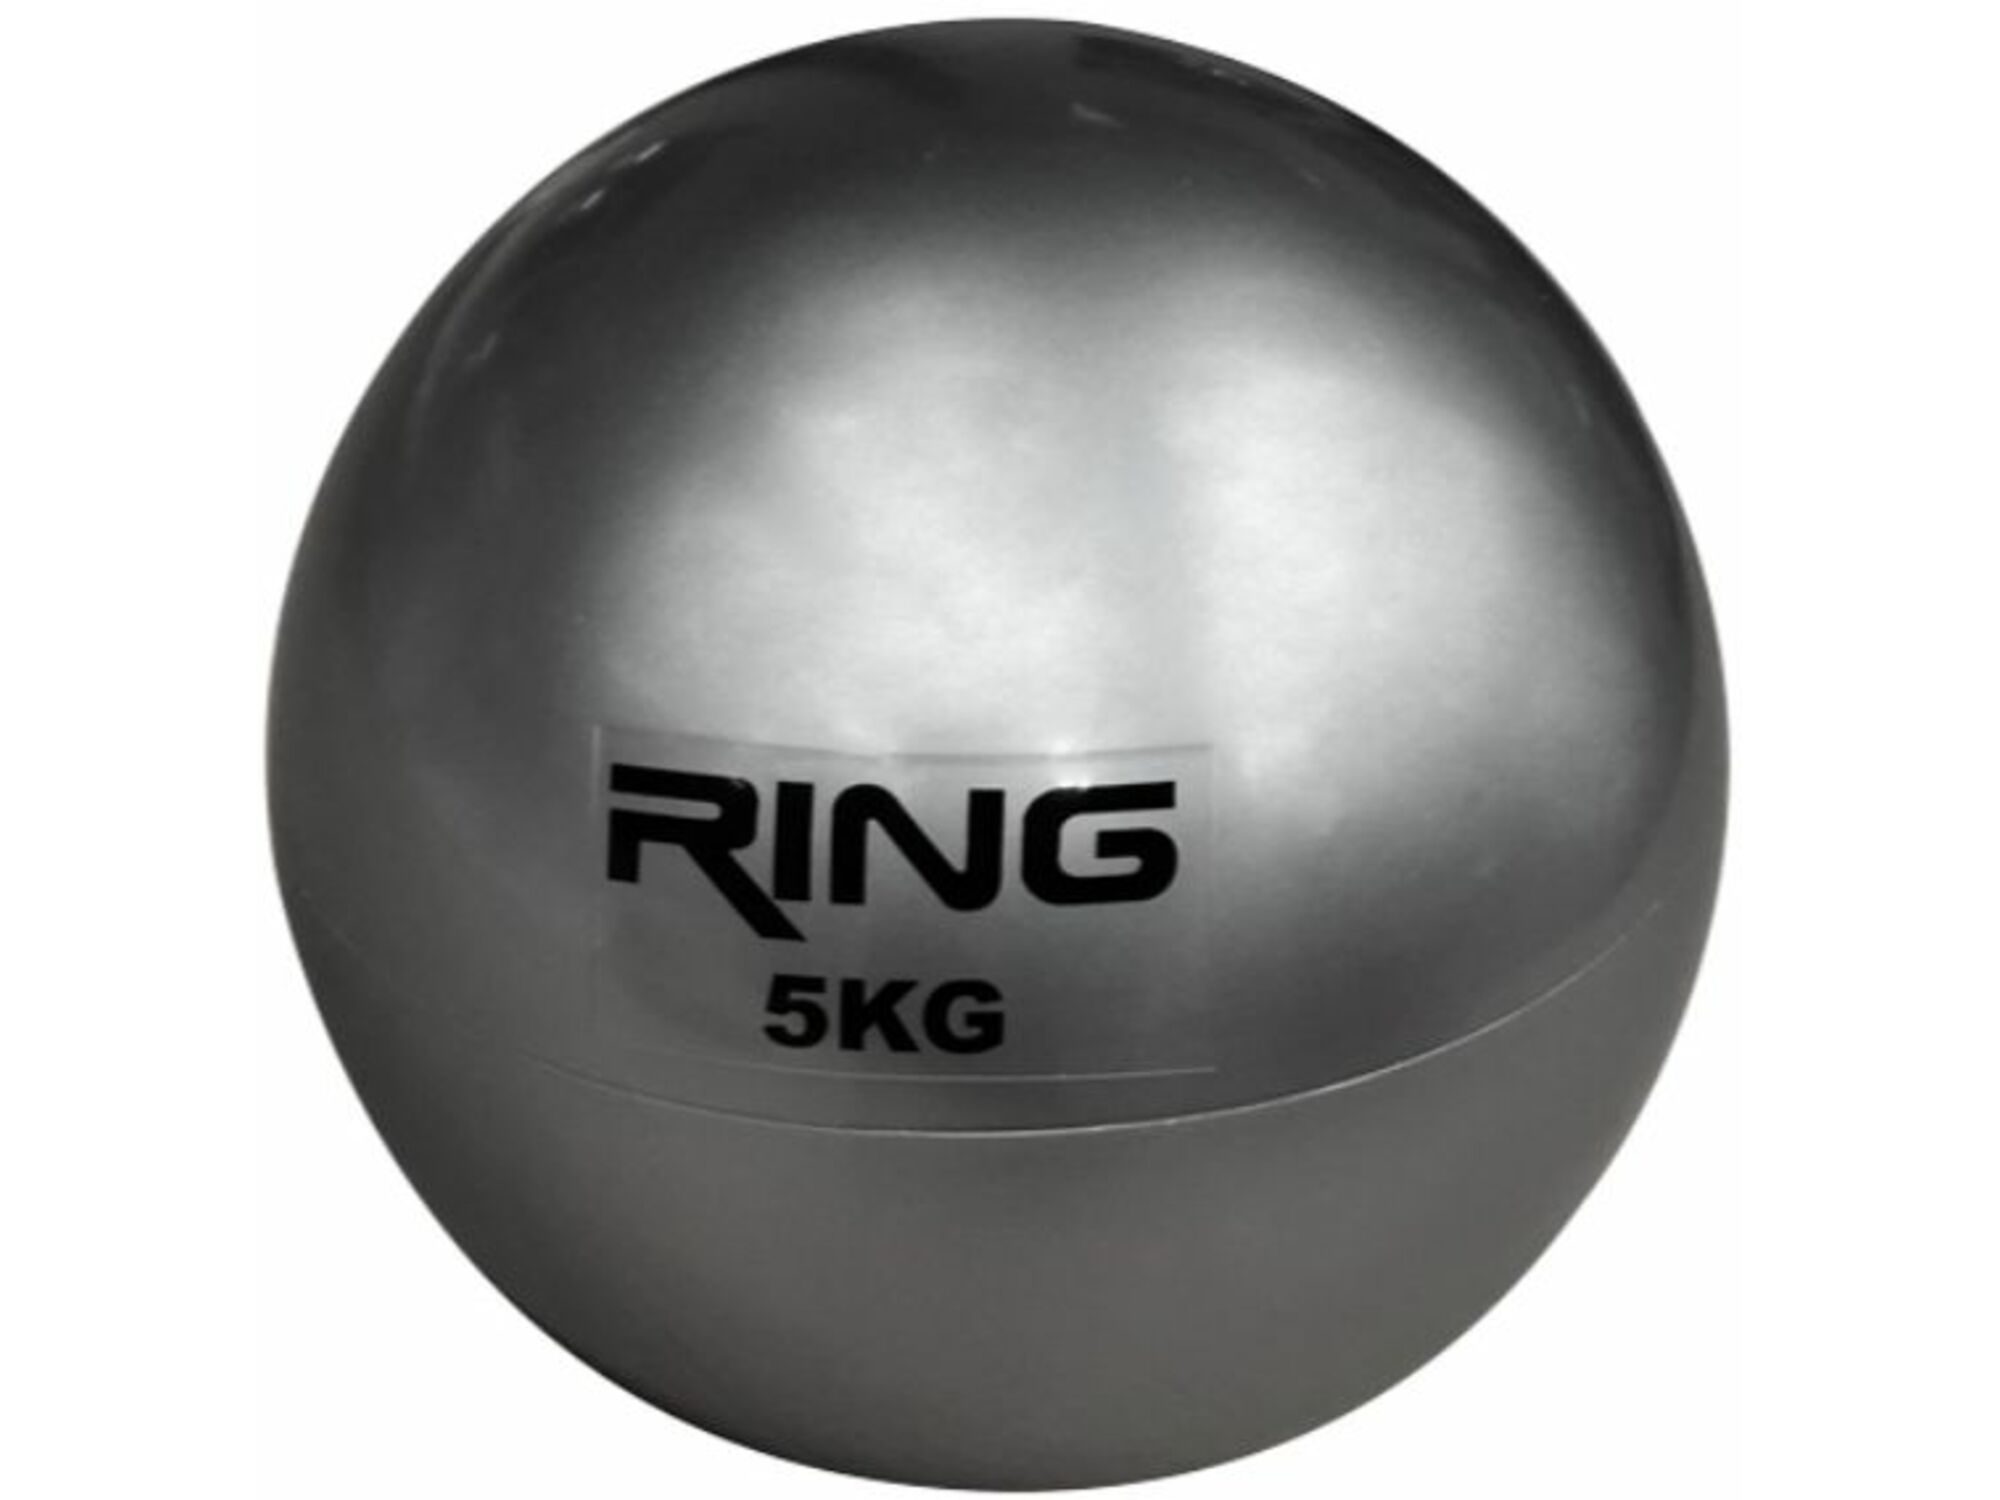 Ring Sand ball 5kg RX BALL009-5kg